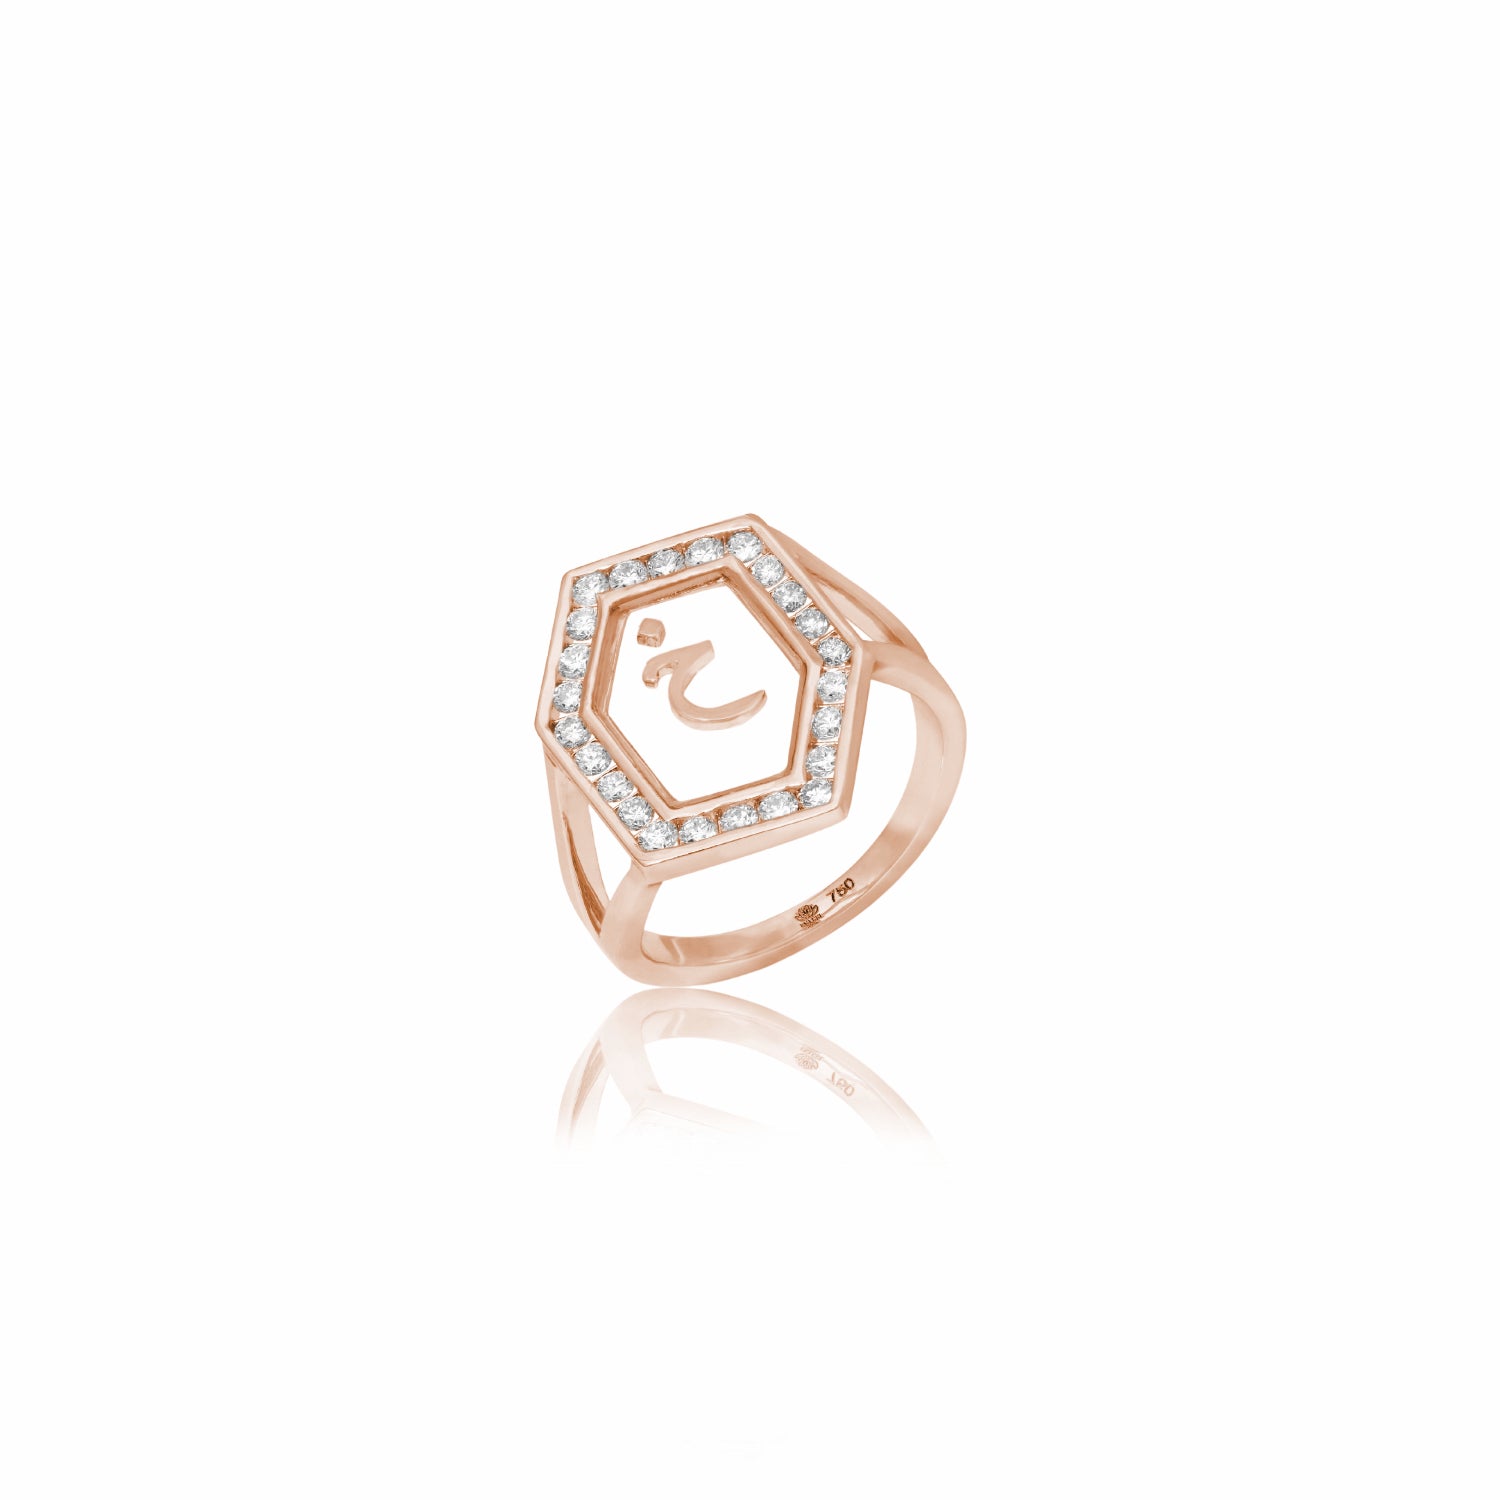 Qamoos 1.0 Letter خ Diamond Ring in Rose Gold